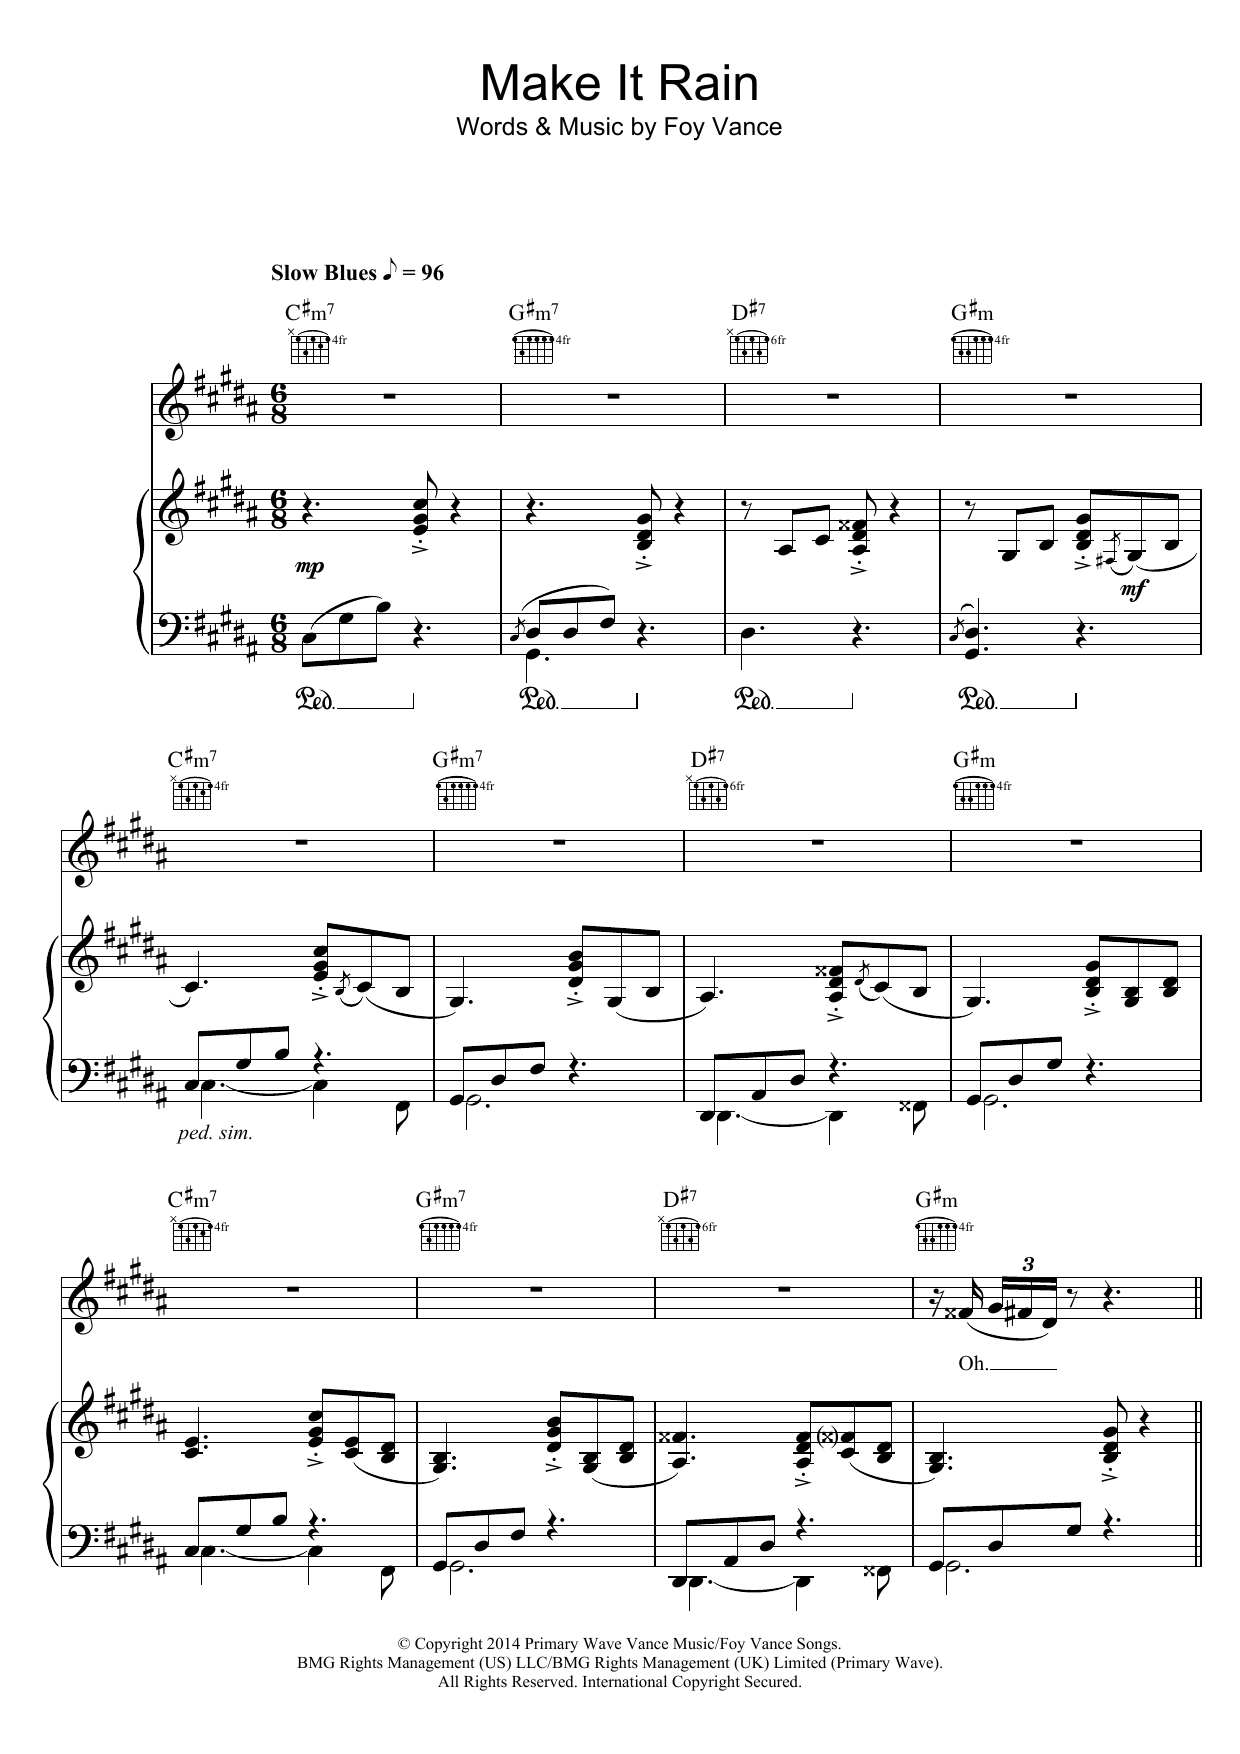 Ed Sheeran Make It Rain Sheet Music Notes & Chords for Piano, Vocal & Guitar (Right-Hand Melody) - Download or Print PDF